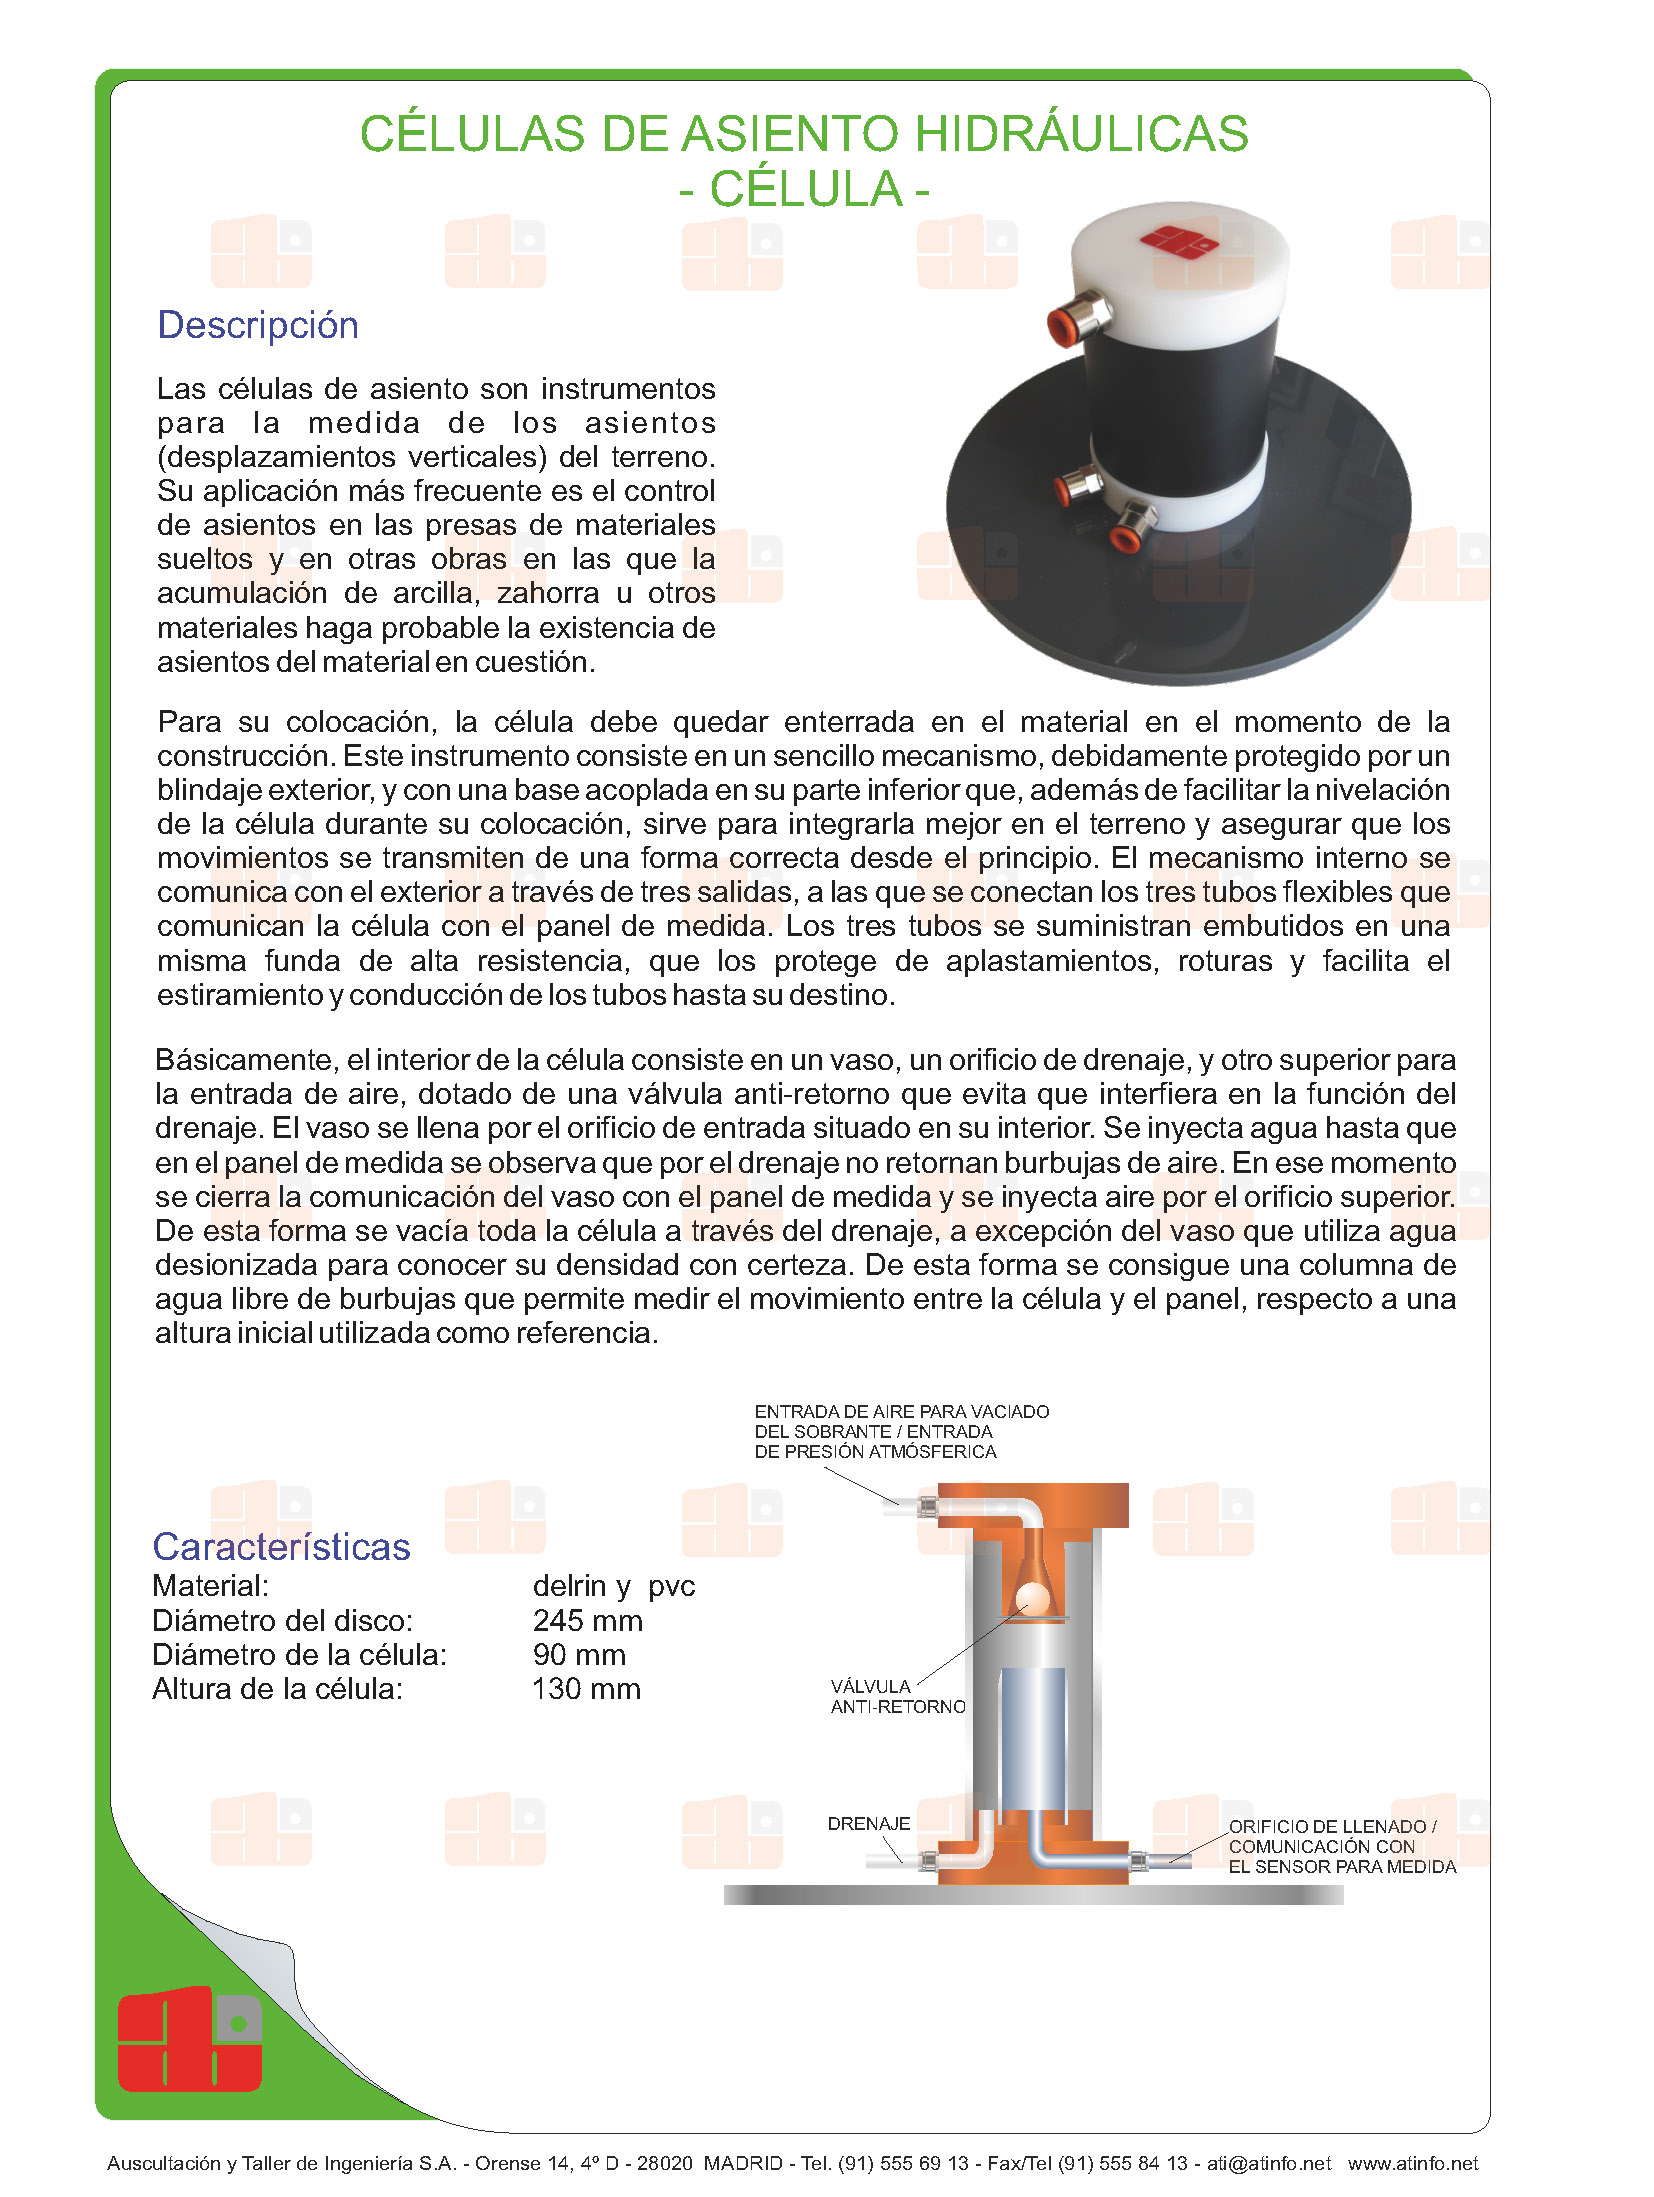 auscultacion-ingenieria-atinfo-celula-asiento-hidraulica